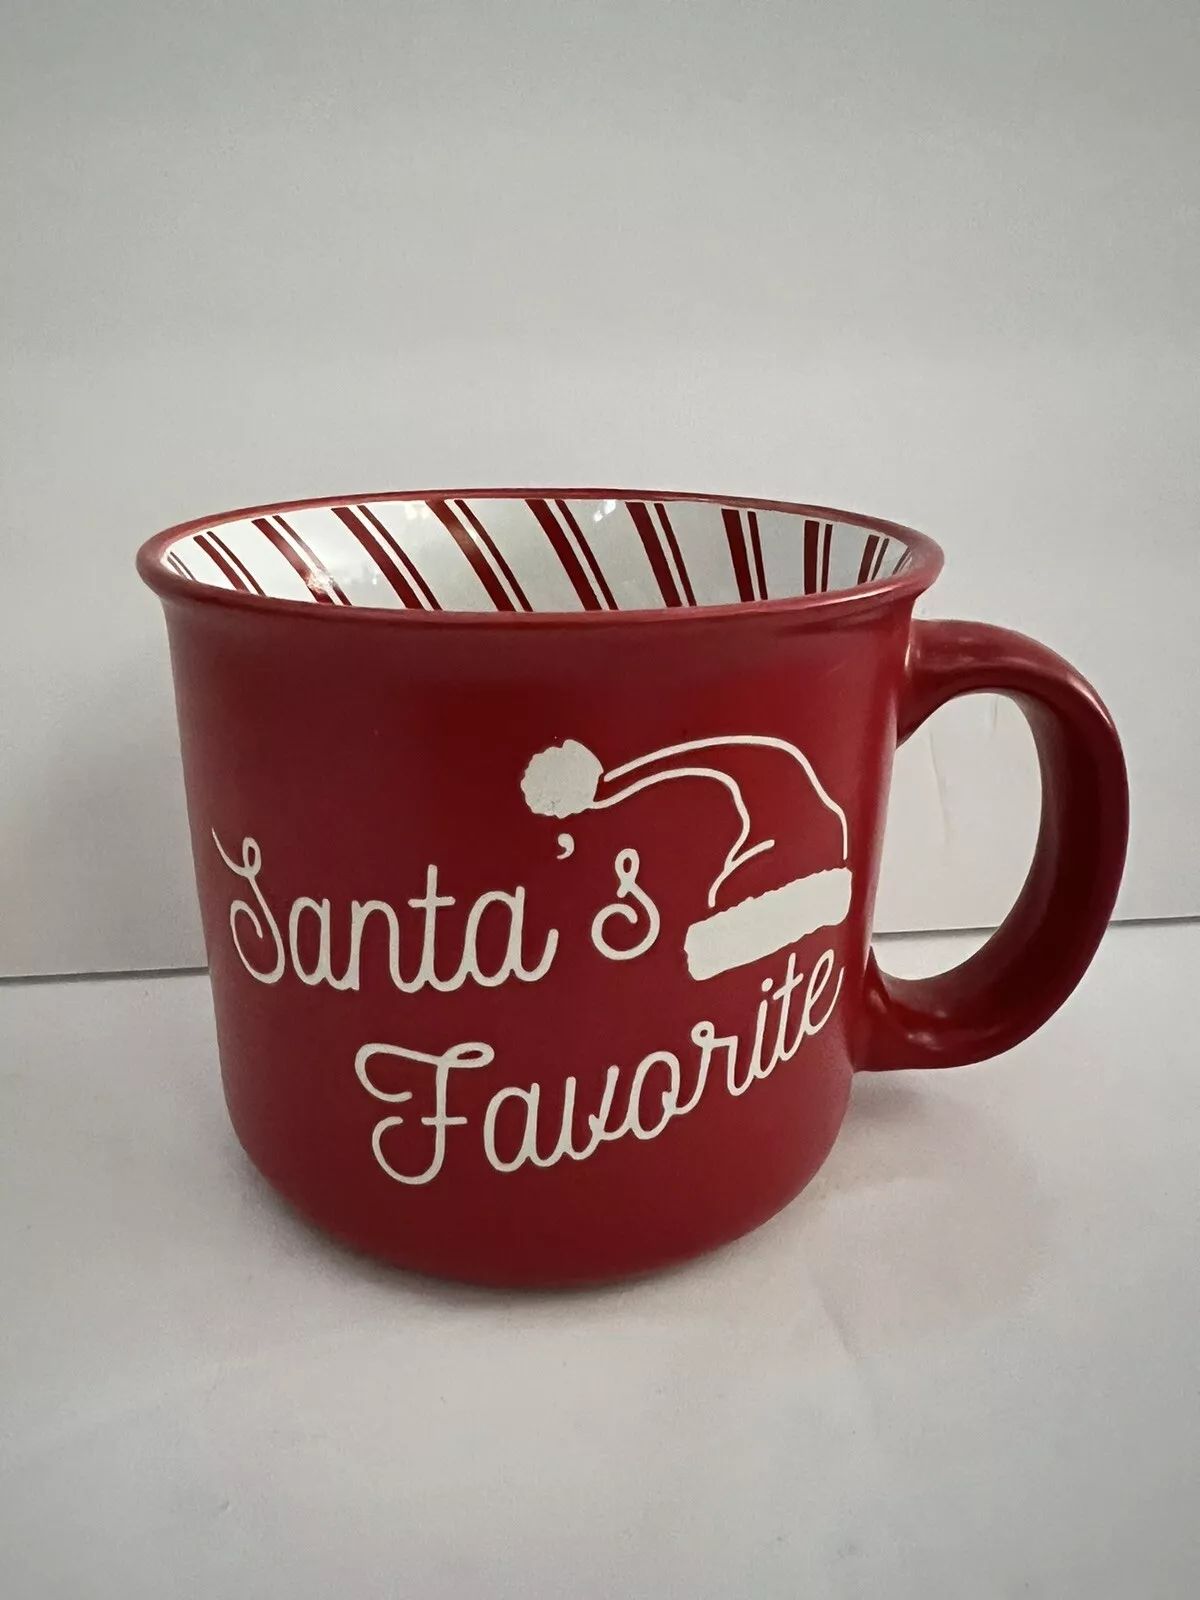 Peppermint & Pine “Santa’s Favorite” mug | eBay US